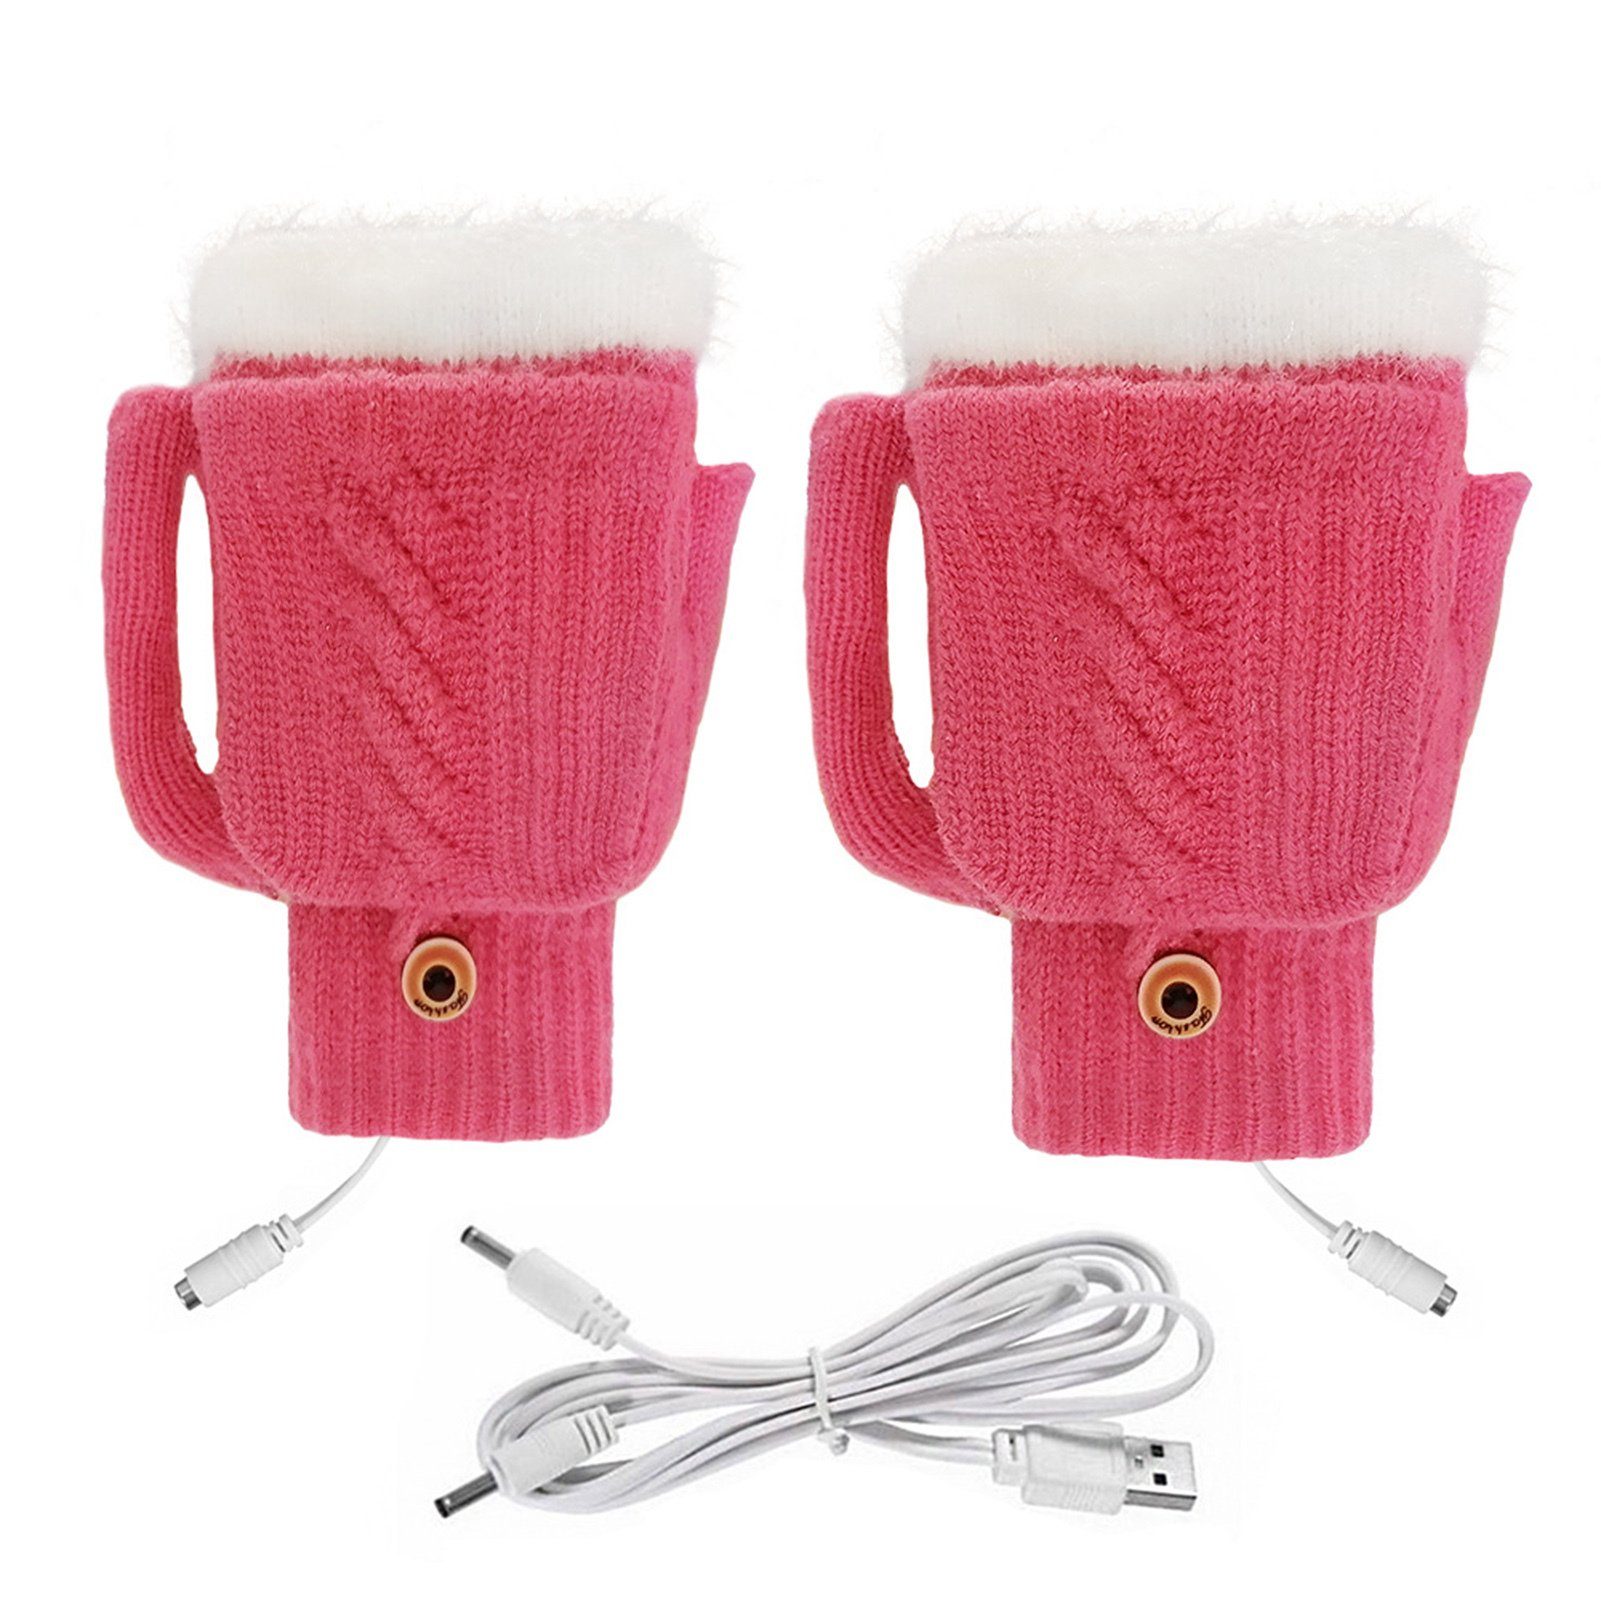 Für Kaltes Wetter, Hochelastischer, Weicher USB-beheizte Blusmart Fleecehandschuhe Handschuhe Rosa Fleecehandschuhe